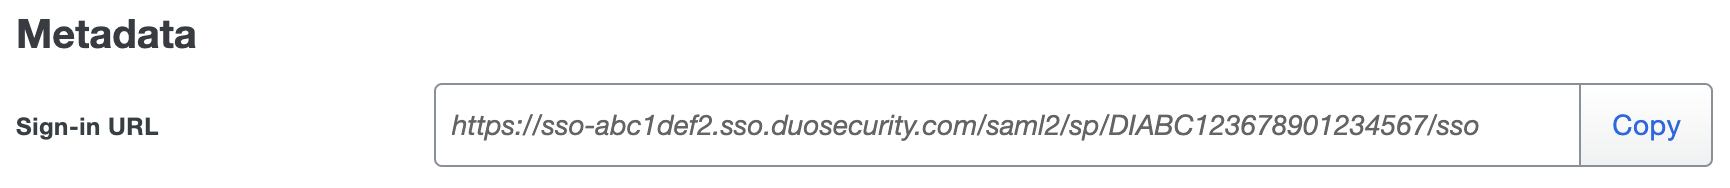 Duo Zoho Directory Metadata Sign-In URL